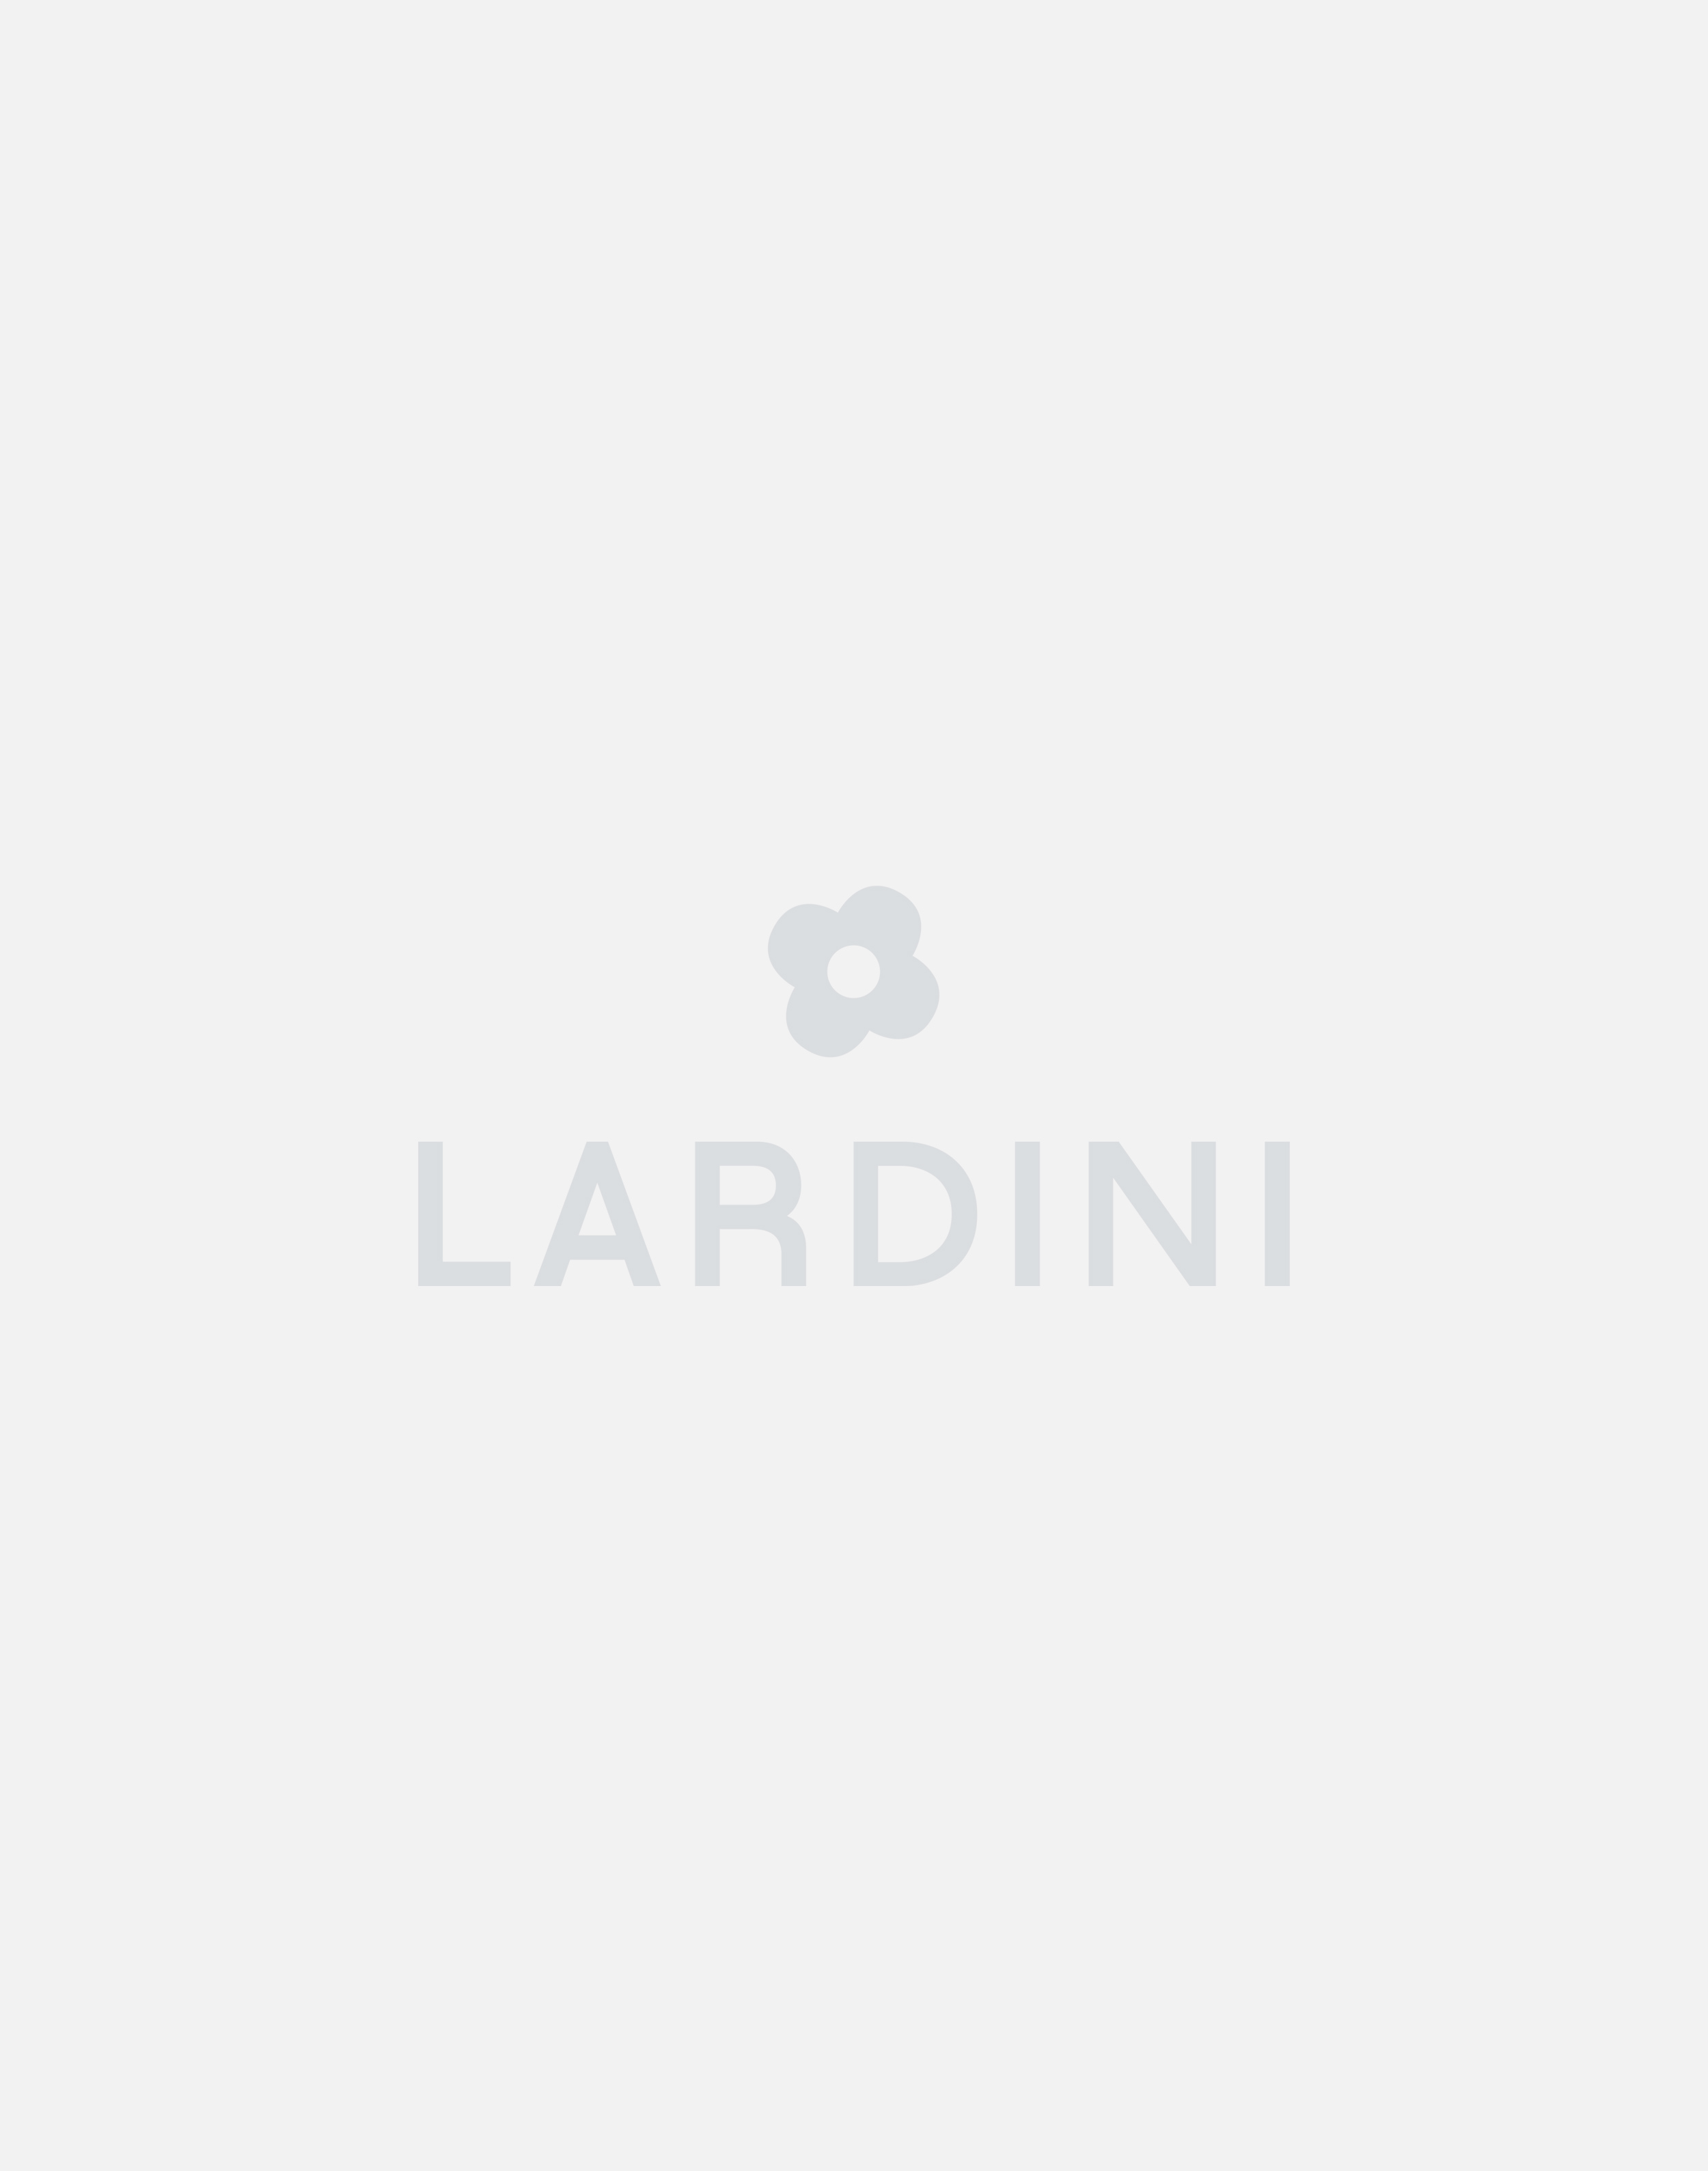 Green compact cotton polo shirt - Luigi Lardini capsule 2